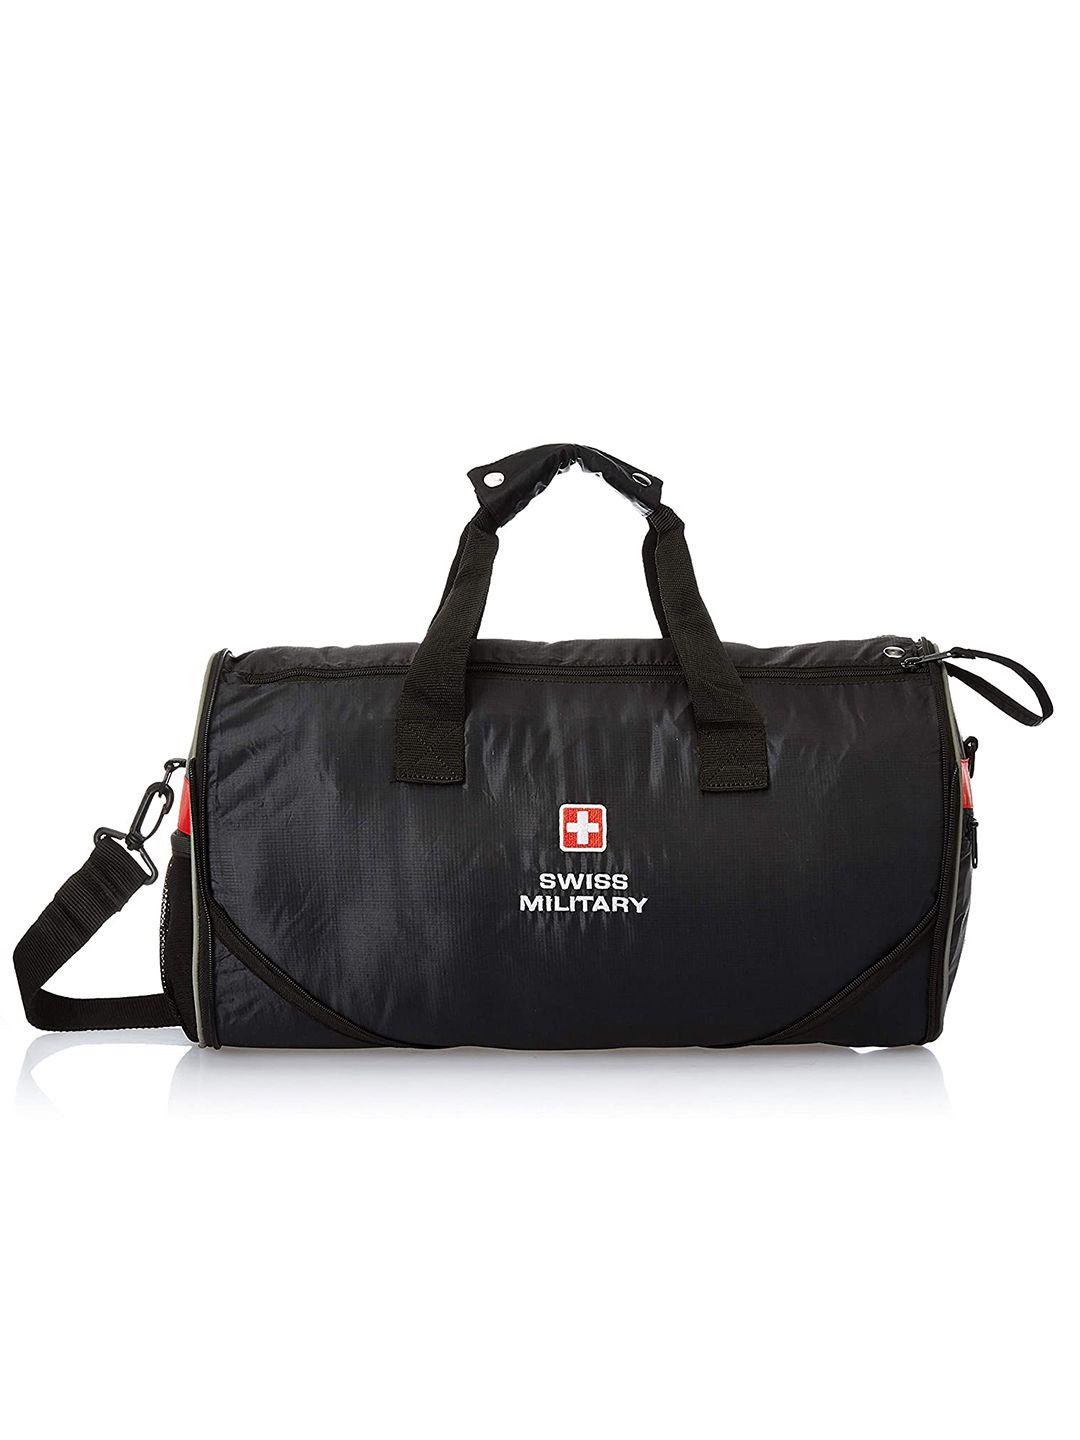 swiss military unisex black foldable duffel bag